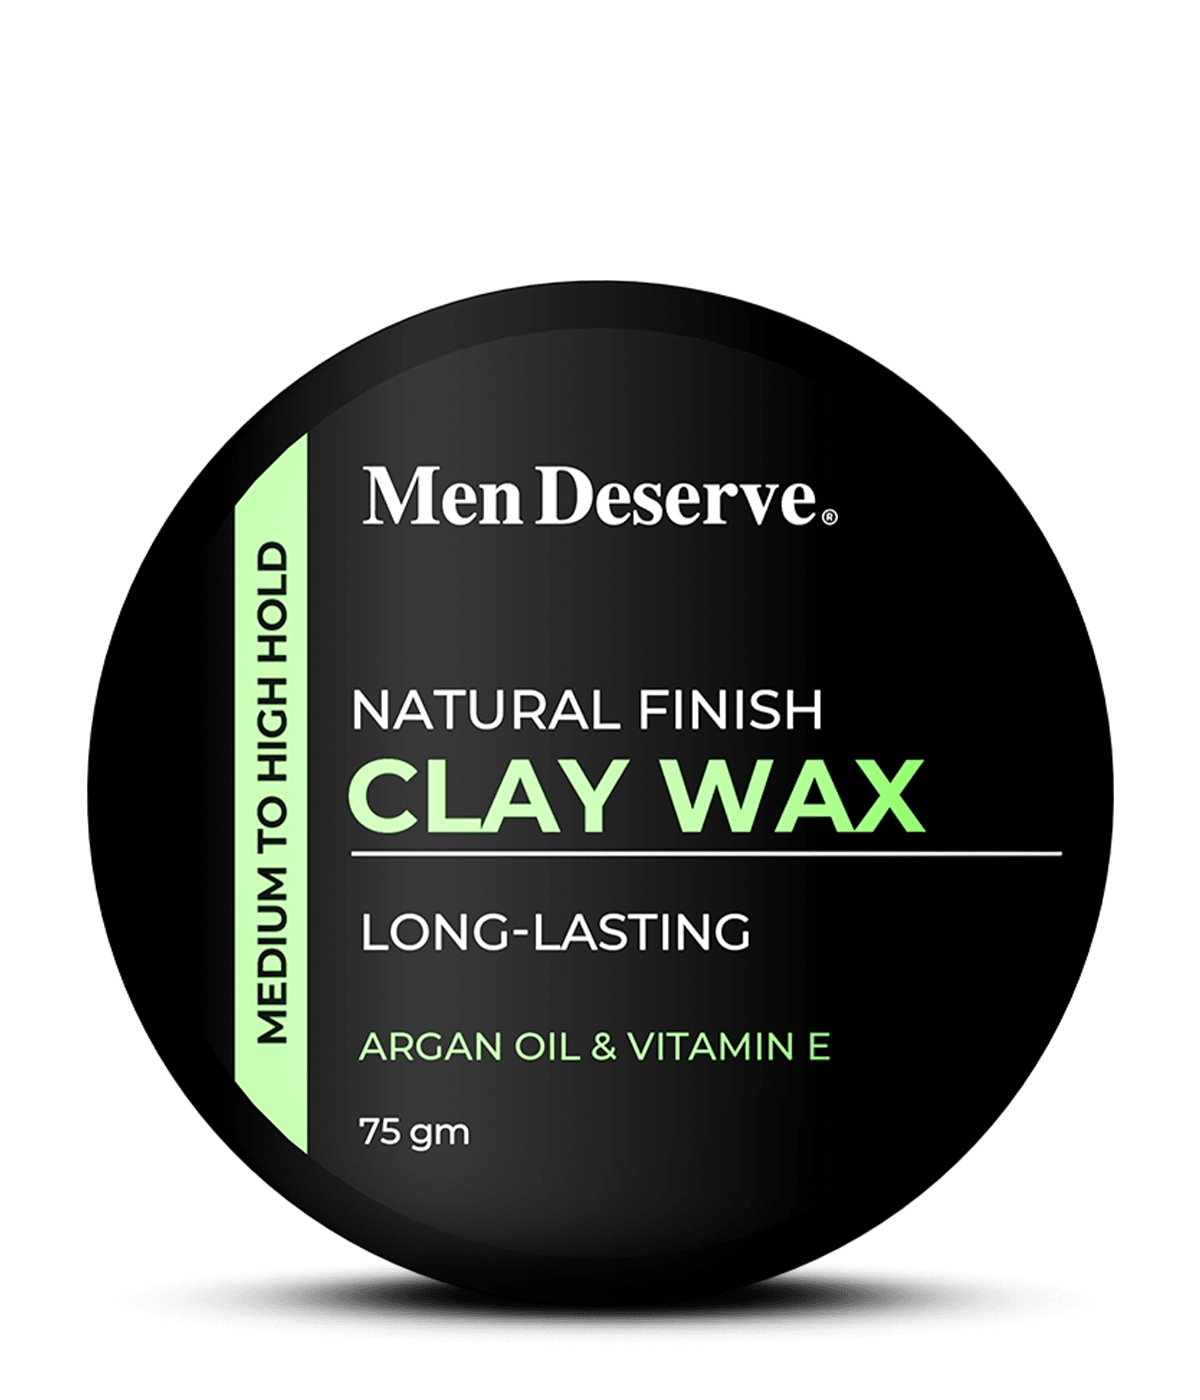 Natural Finish Hair Clay Wax - Men Deserve